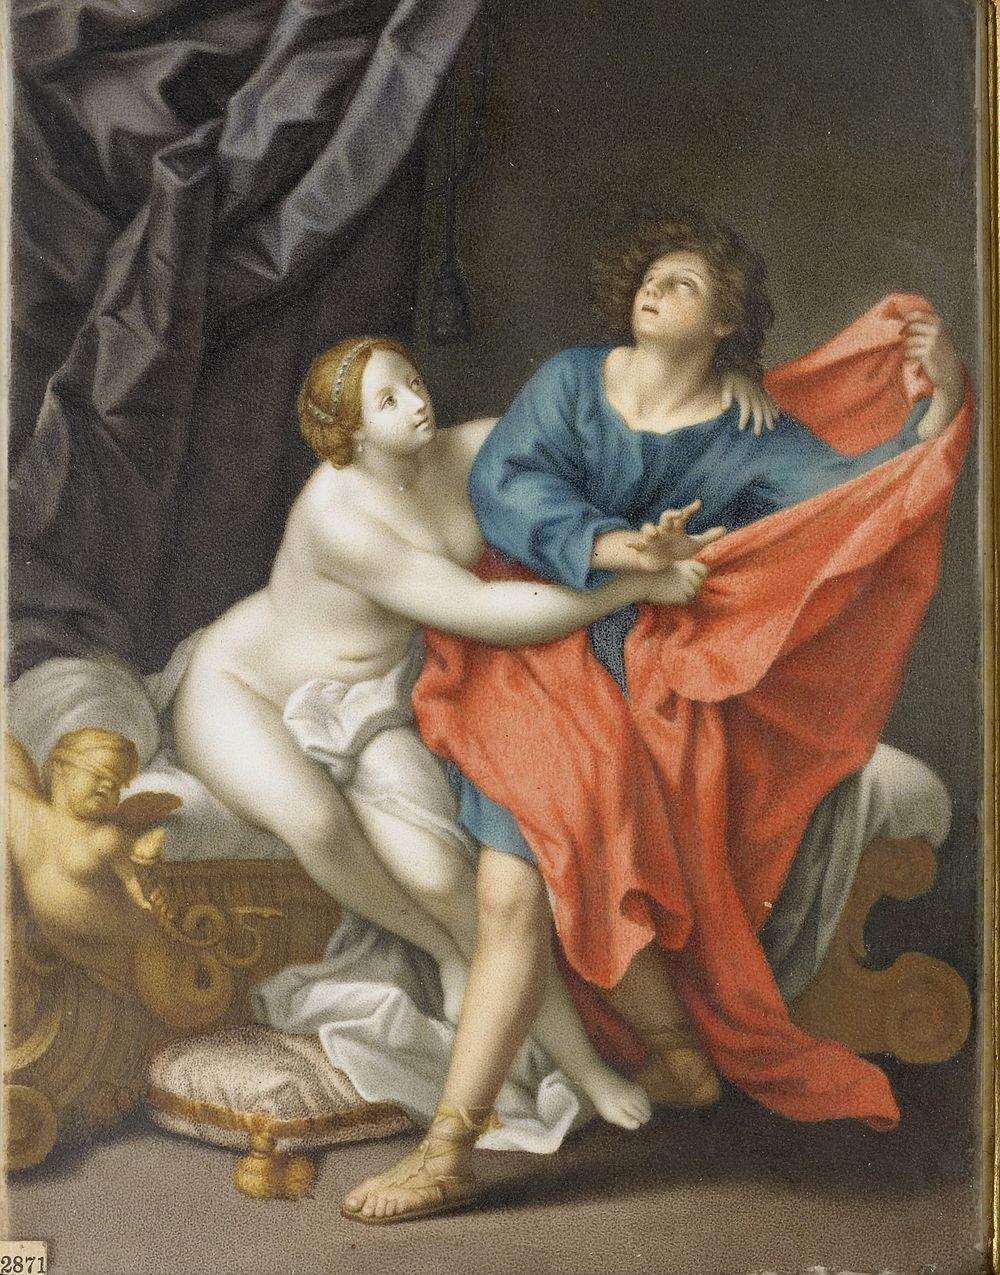 Jozef en de vrouw van Potifar (1726) by Felice Ramelli and Carlo Cignani